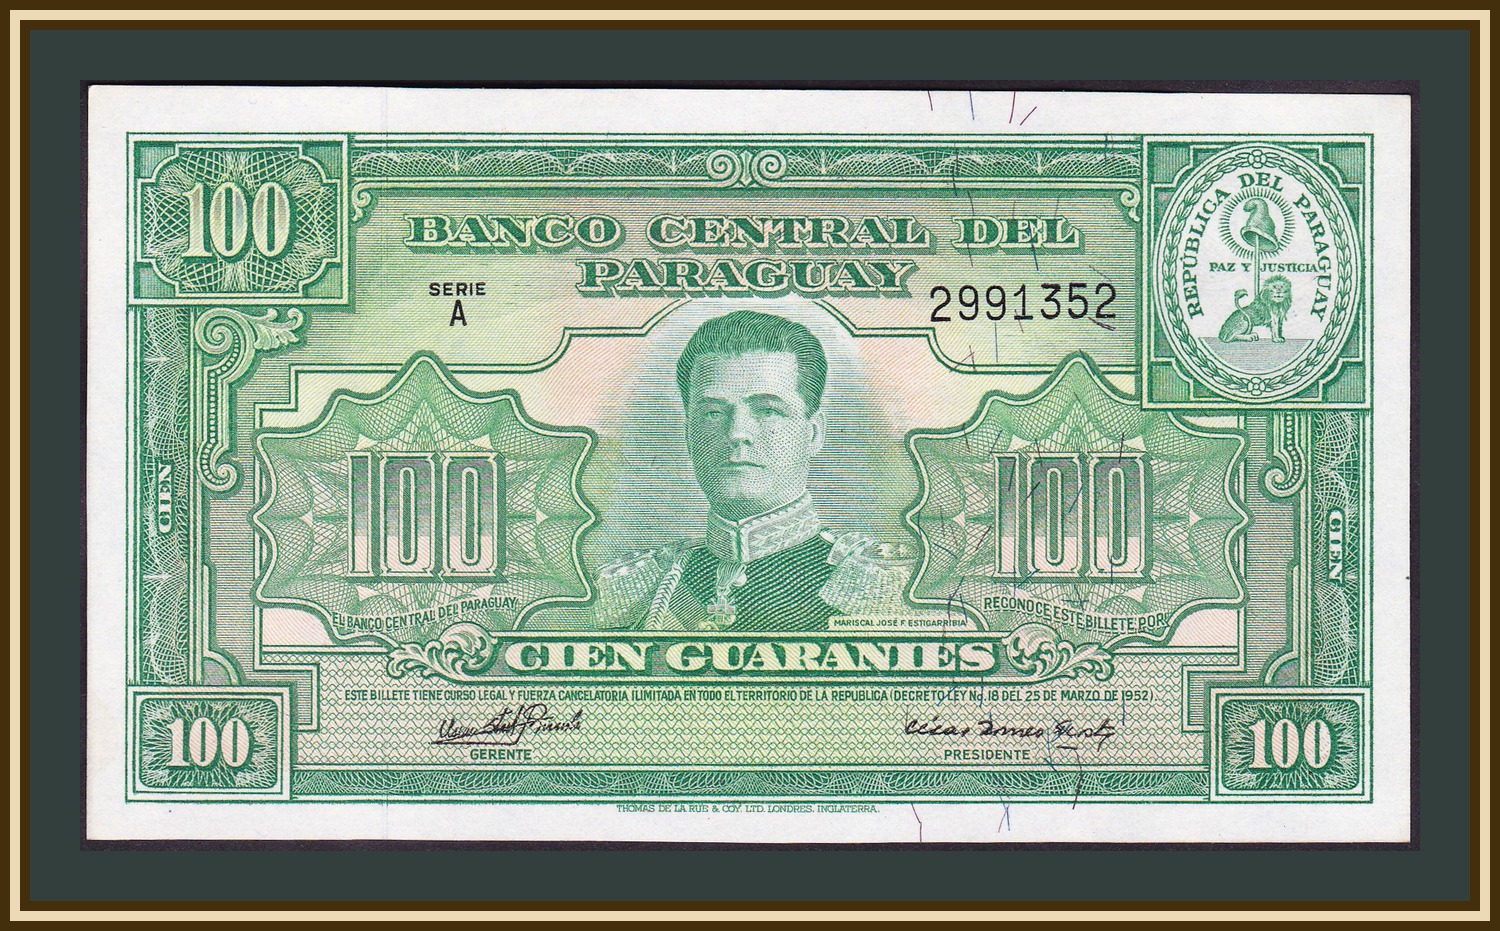 Валюта парагвая. Парагвайский Гуарани. Банкноты Парагвая. 100 Гуарани банкнота. Старинные банкноты Португалии.